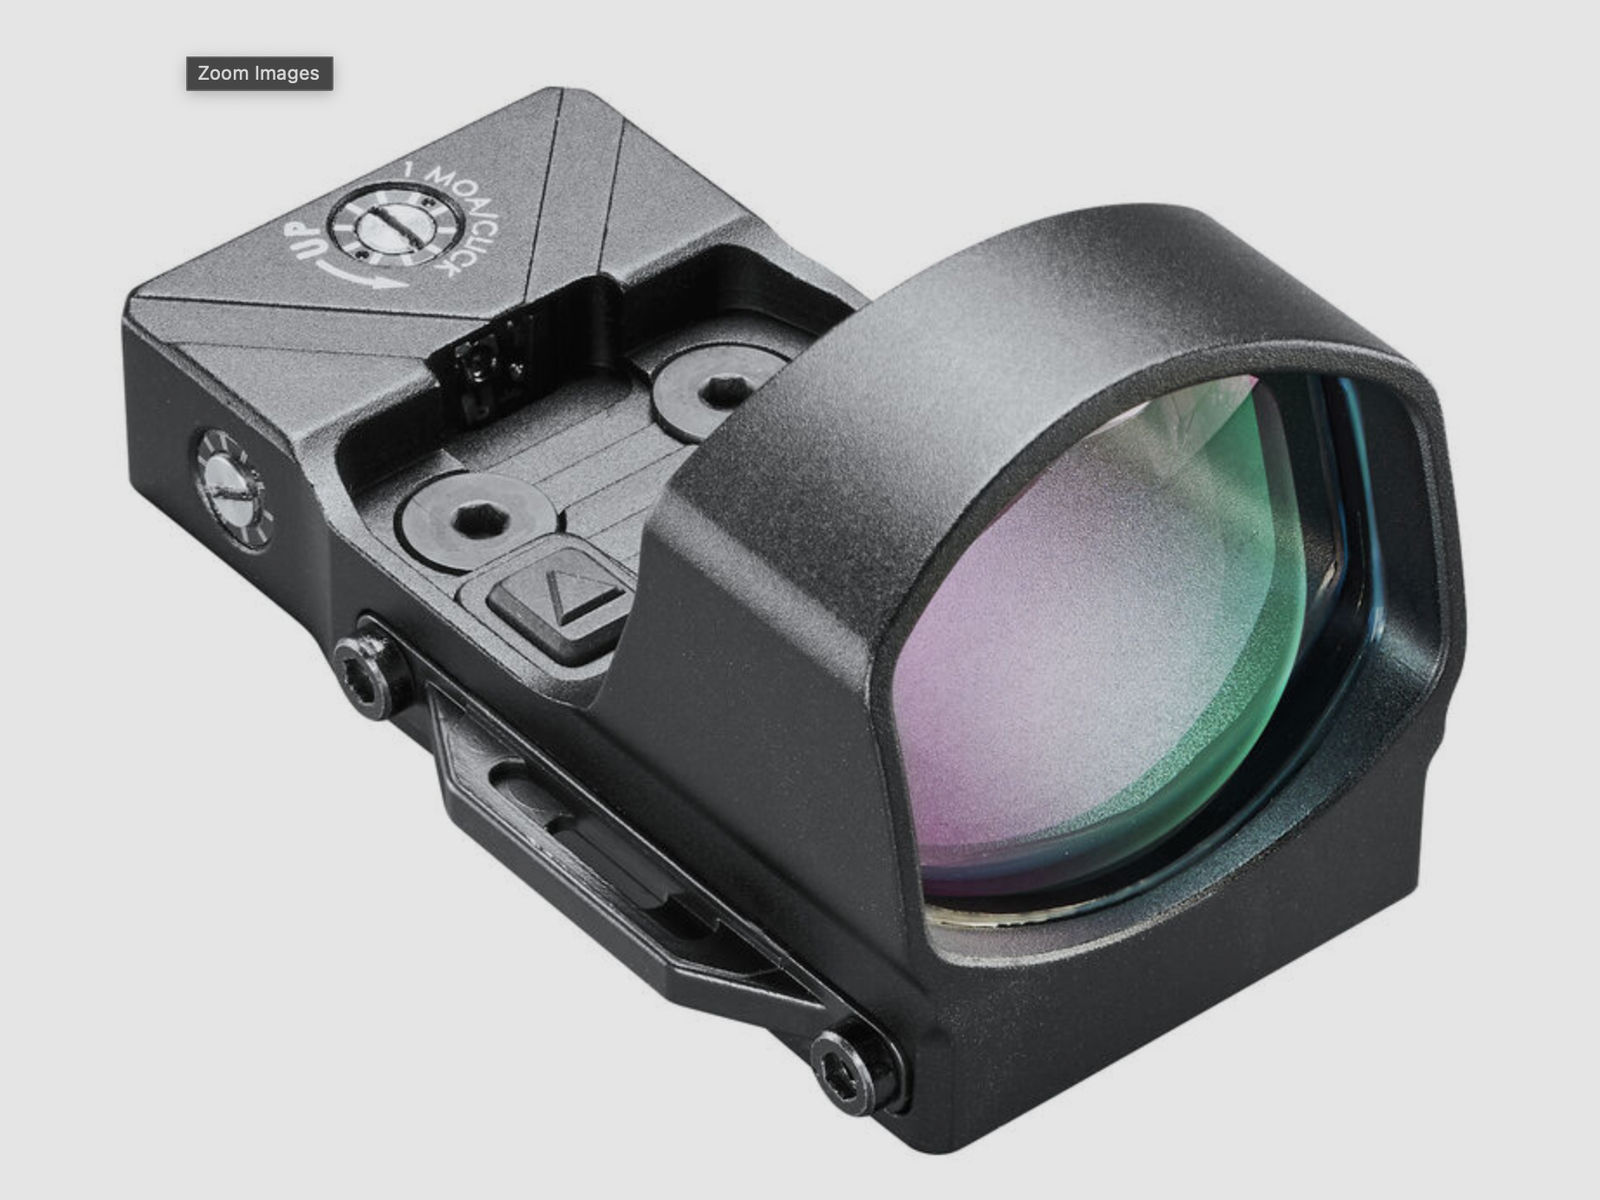 Bushnell TAR71XRS Reflex Sight First Strike 2.0 1x28mm 3 MOA Dot Reticle